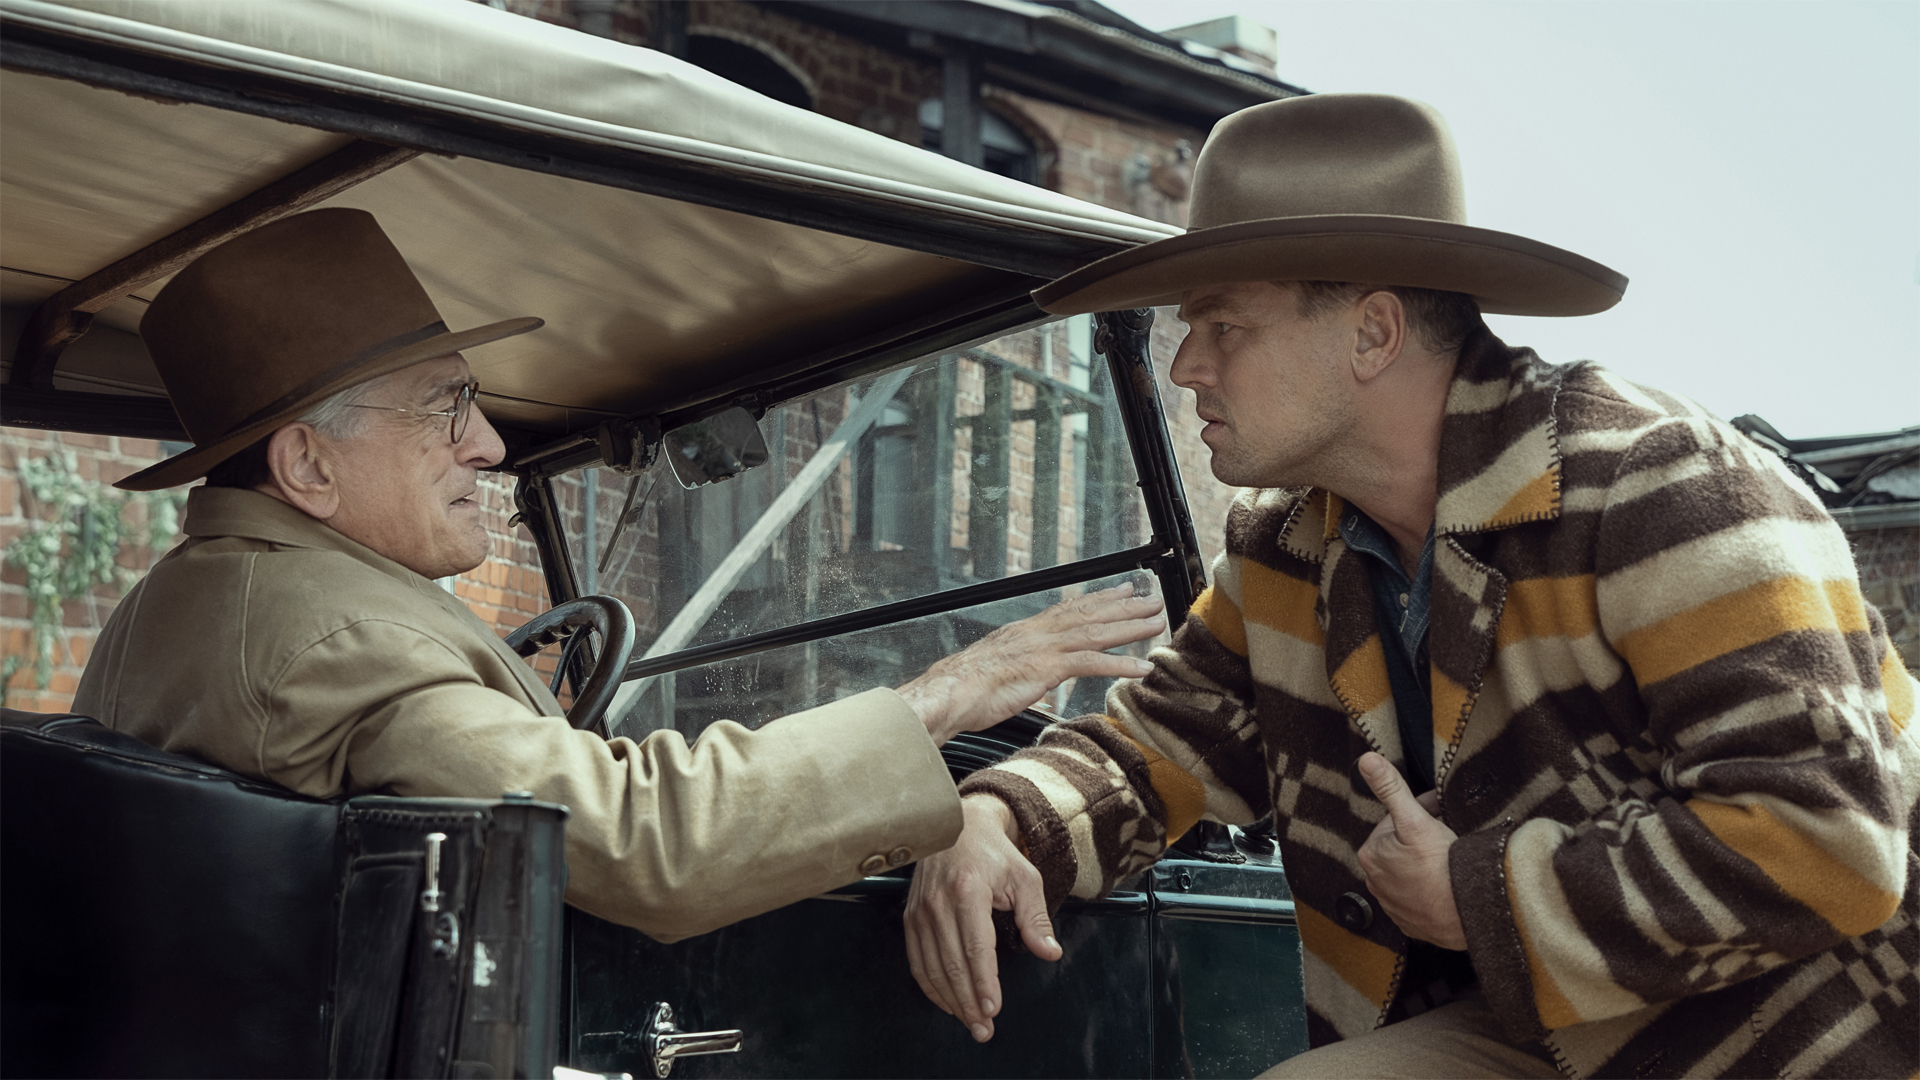 Leonardo DiCaprio's Ernest talks to Robert De Niro's 